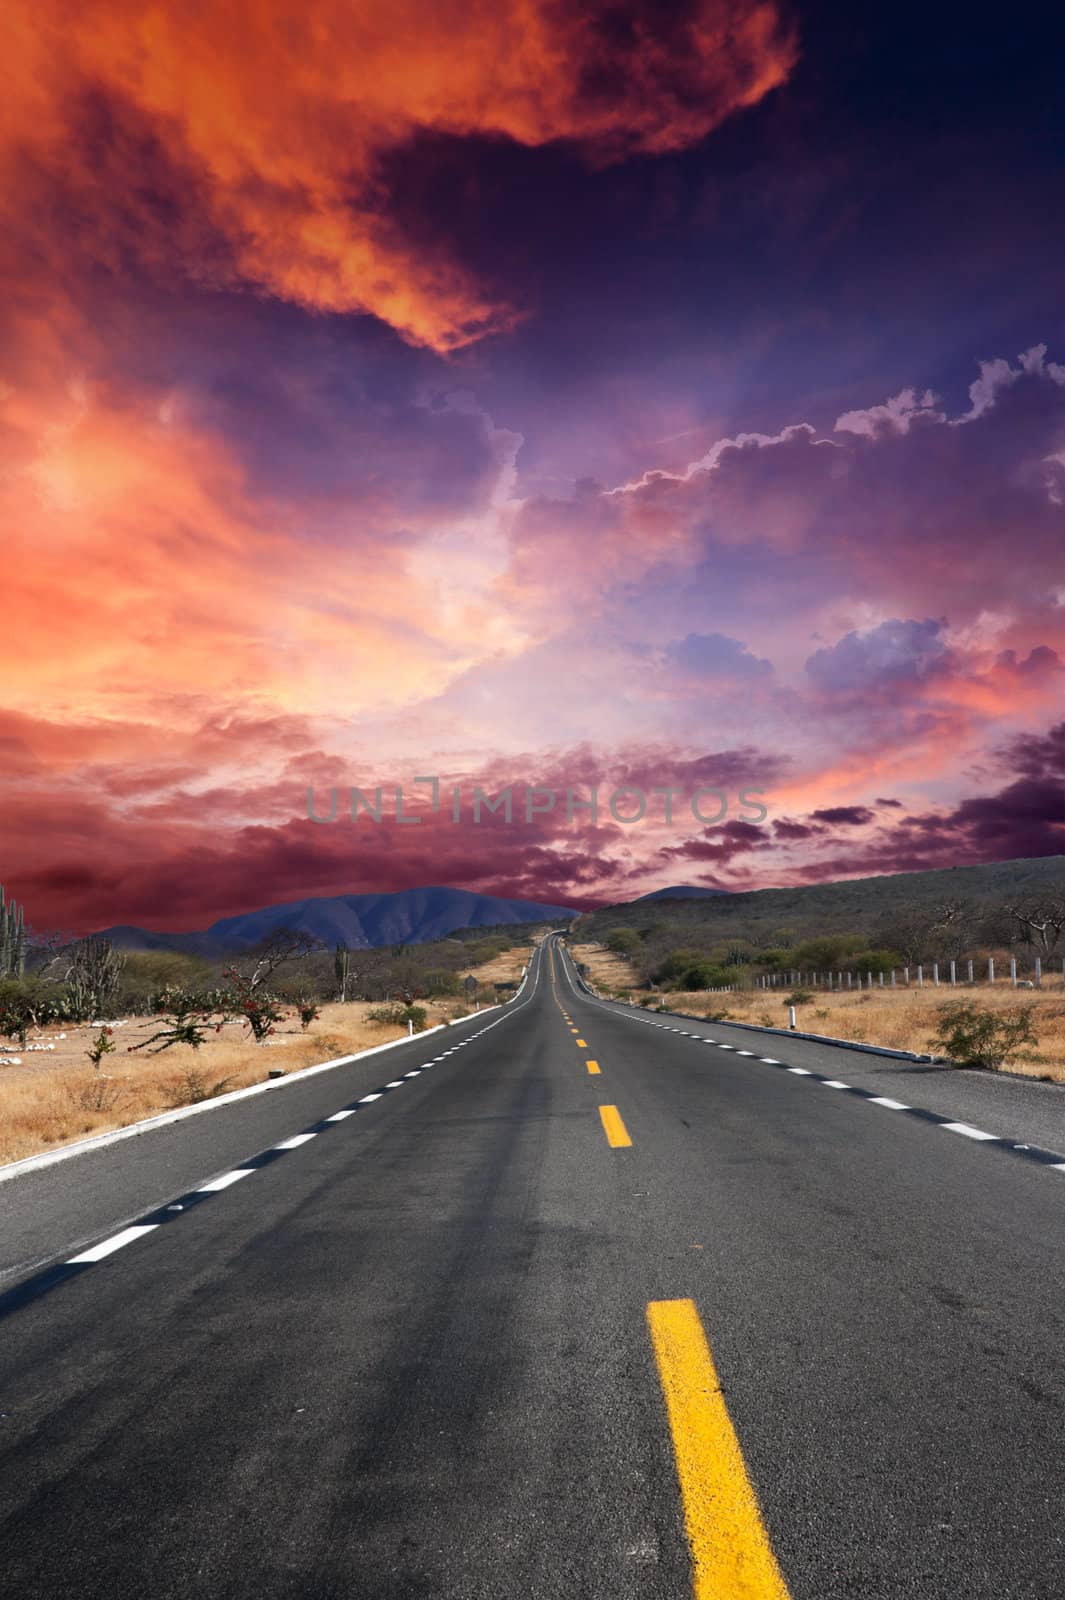 Road in desert  by dimol